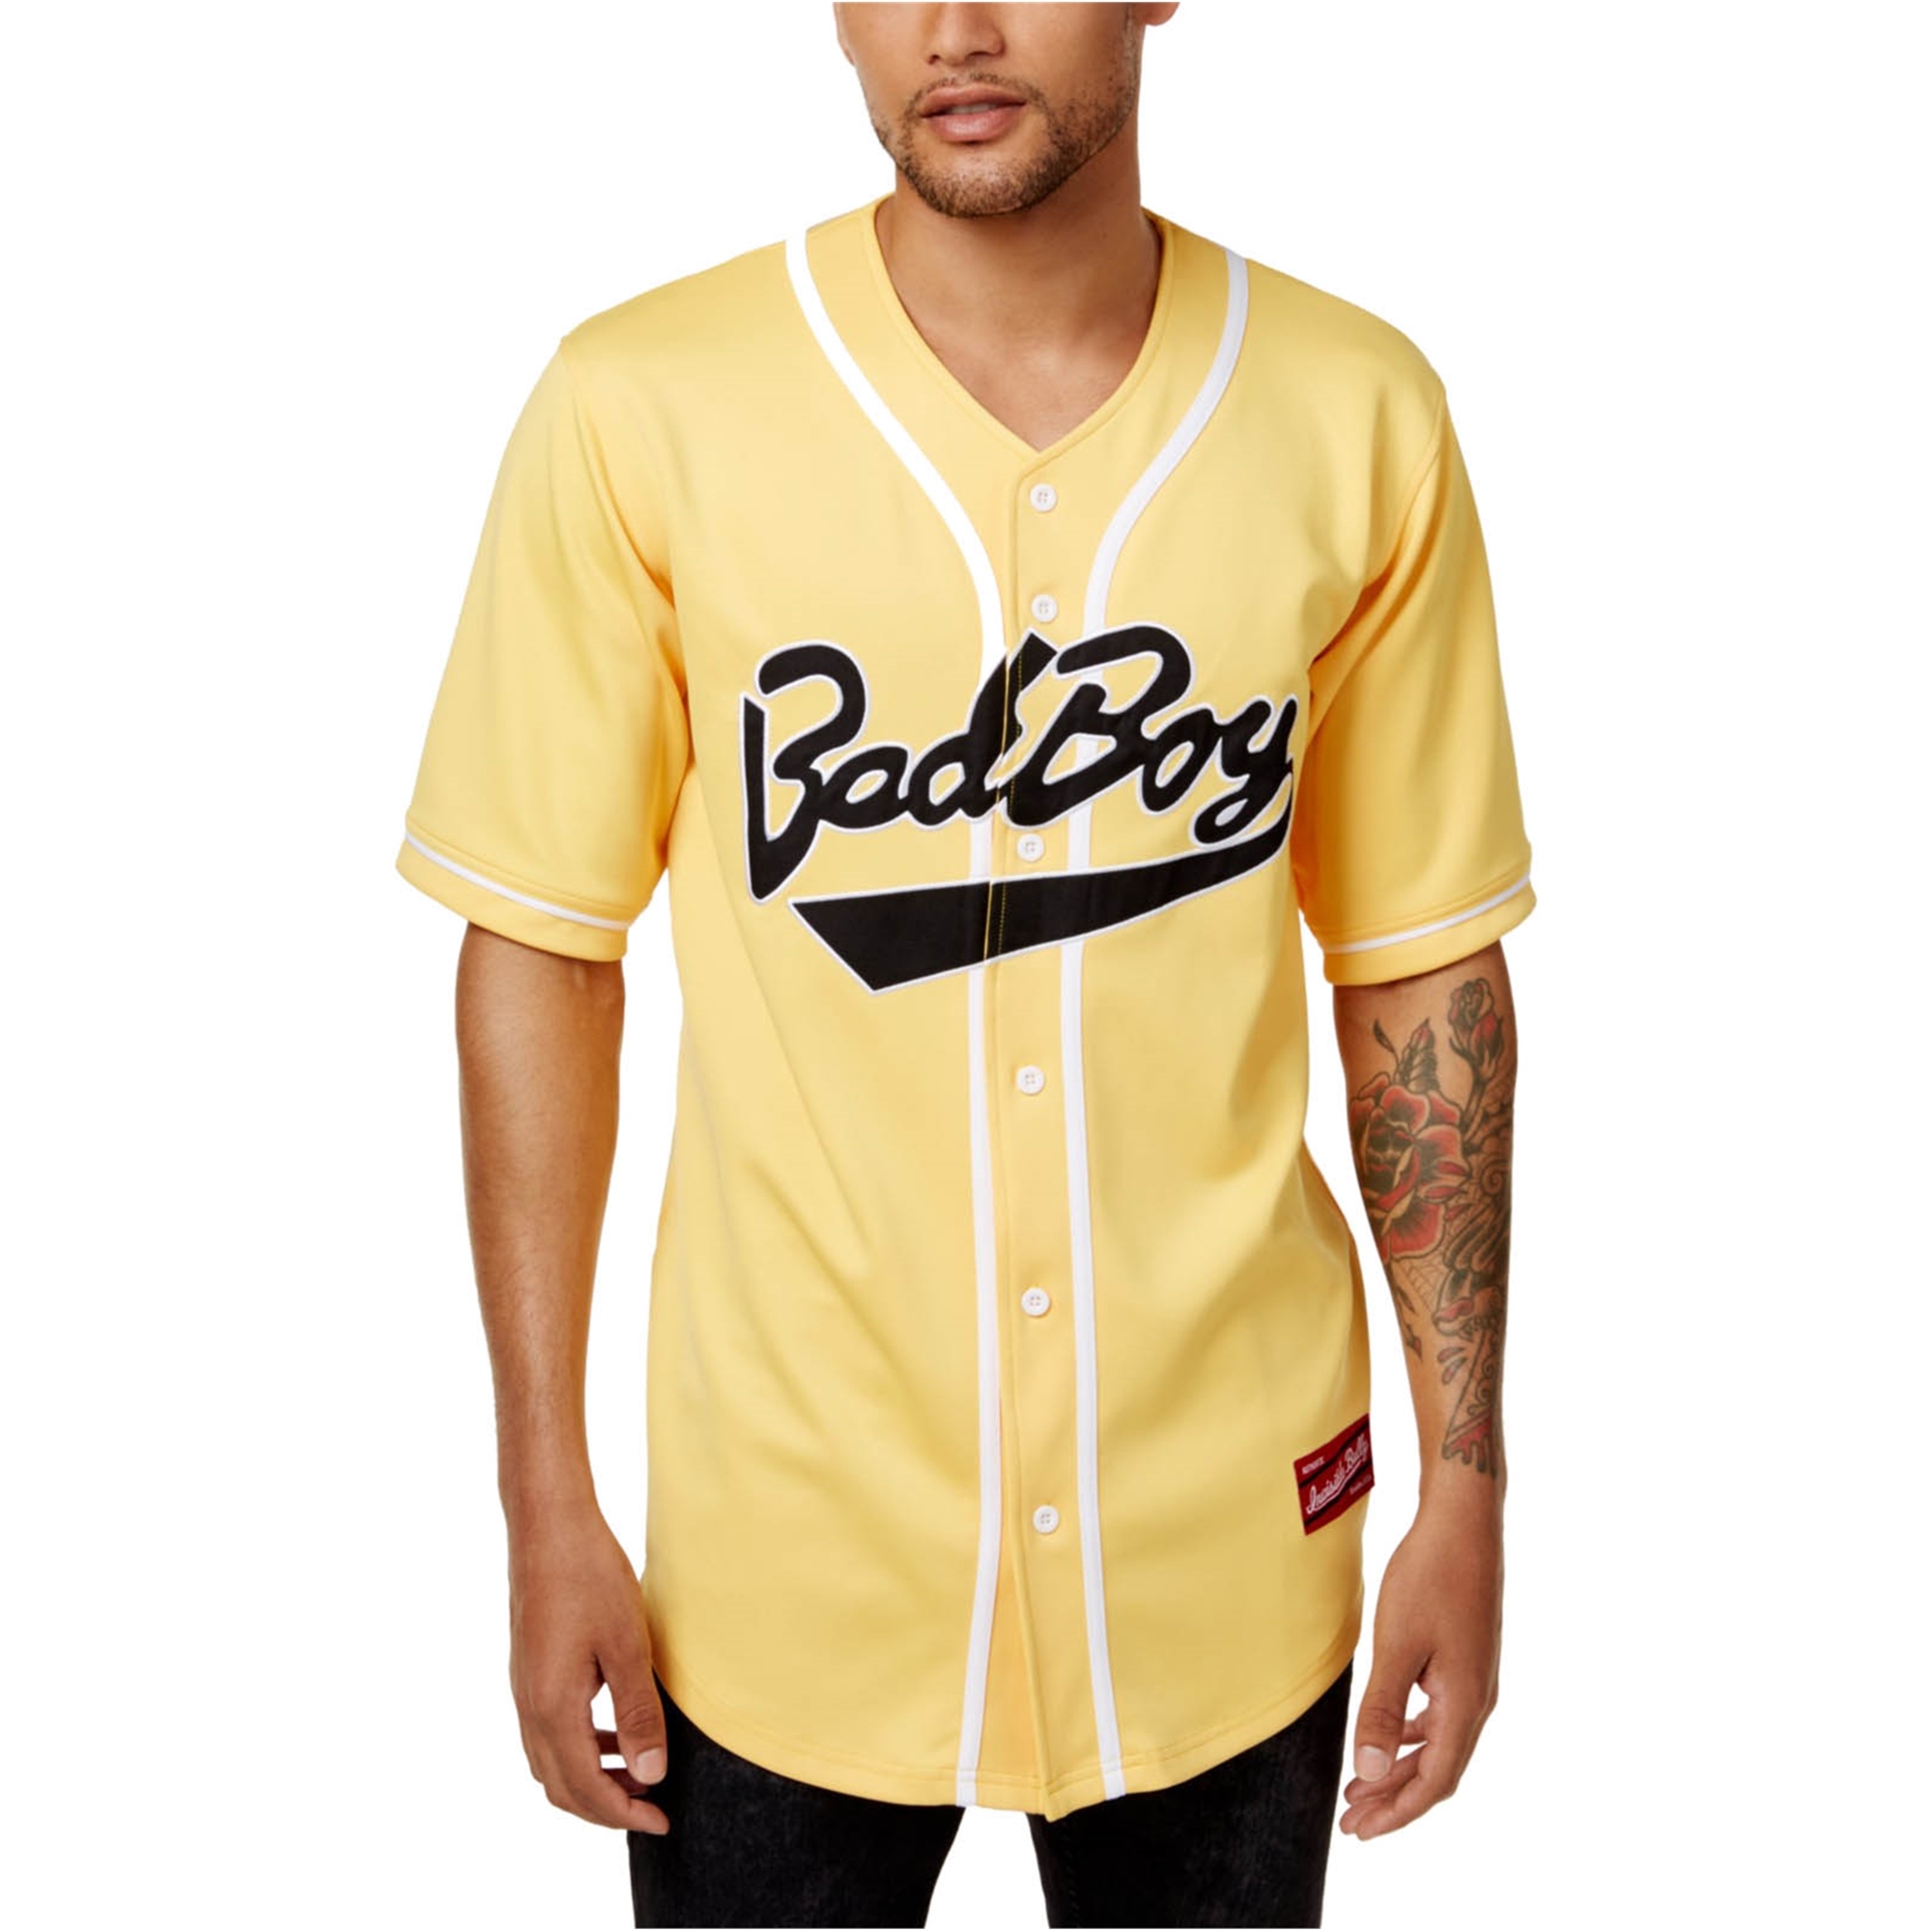 Bad Boy Mens Baseball Jersey | Mens Apparel | Free Shipping on All ...